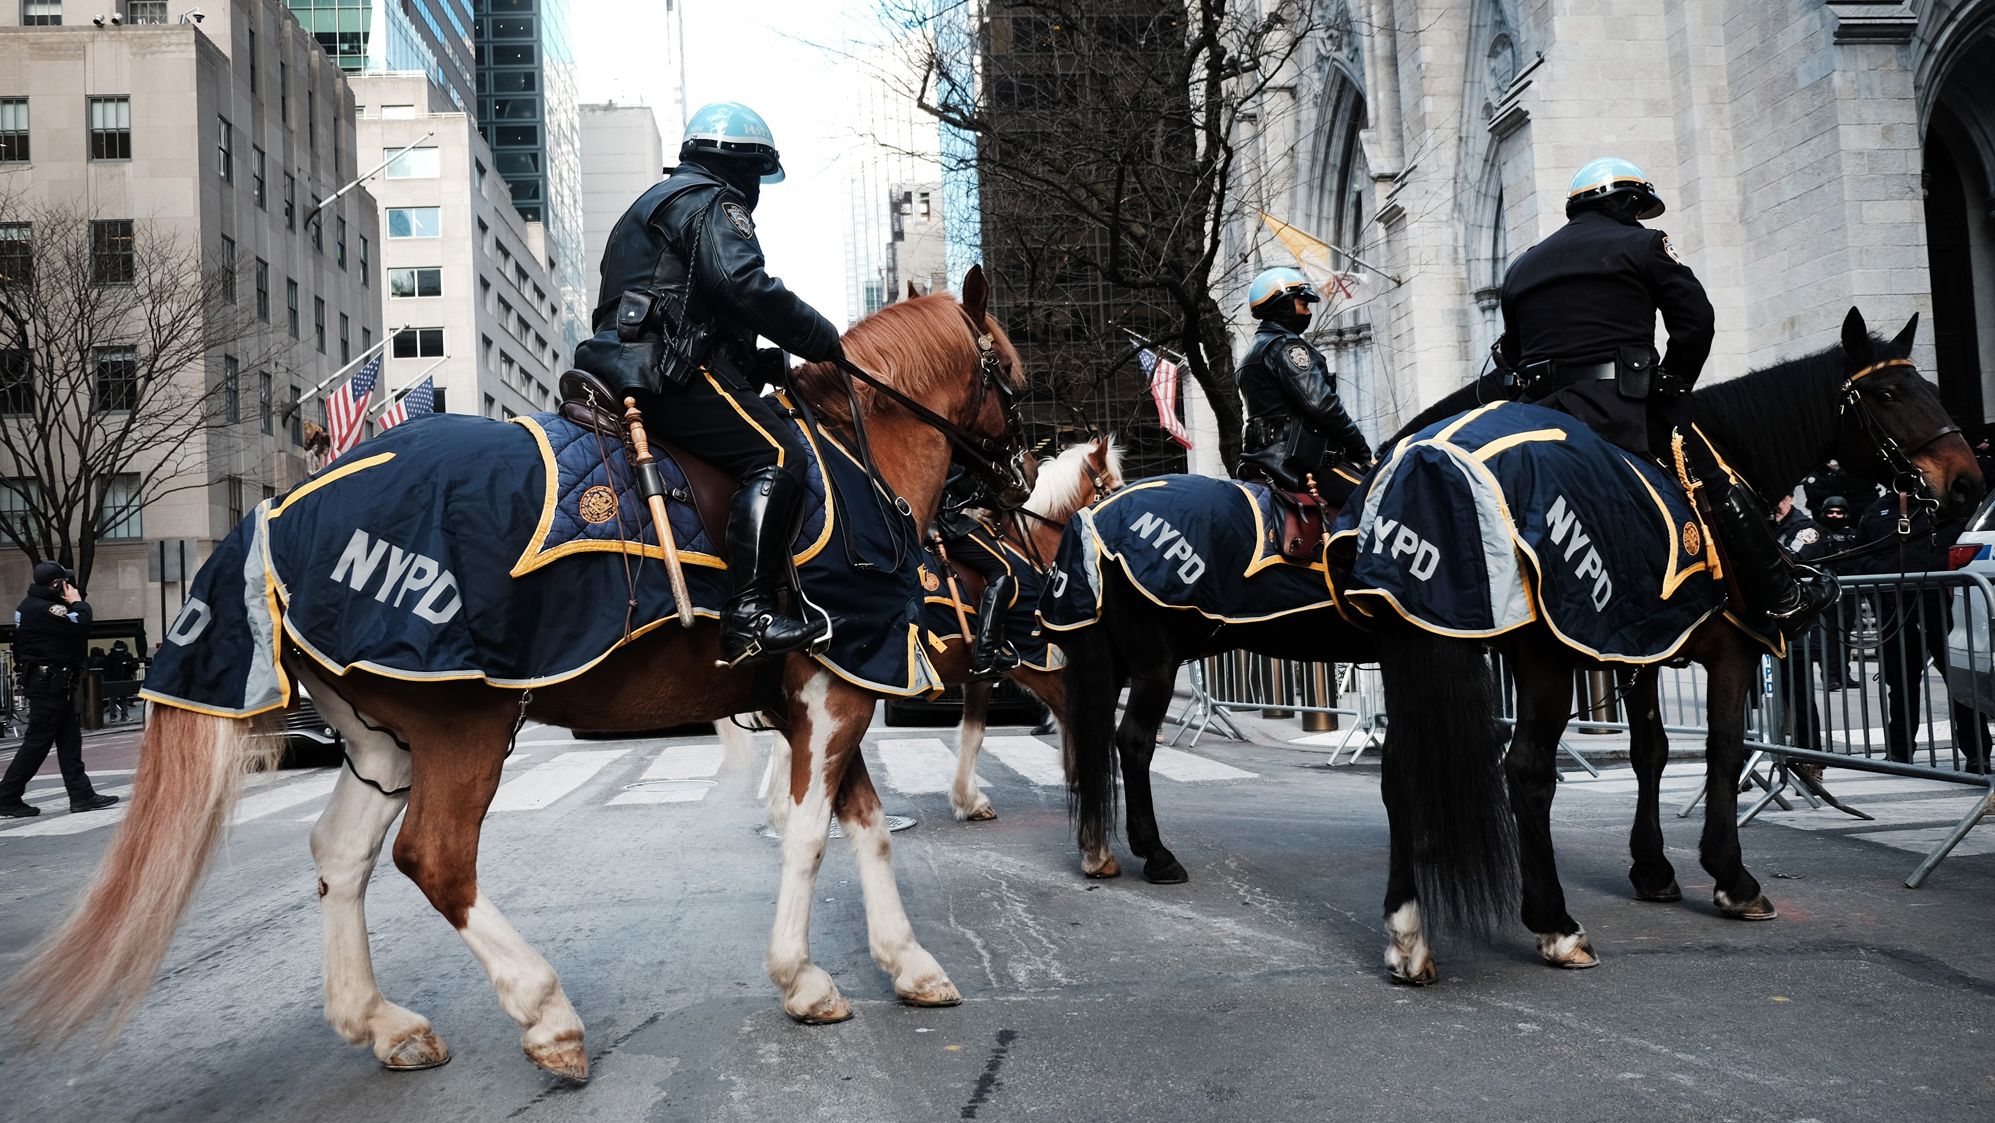 Police officers on horseback arrive outside St. Patrick's Cathedral.